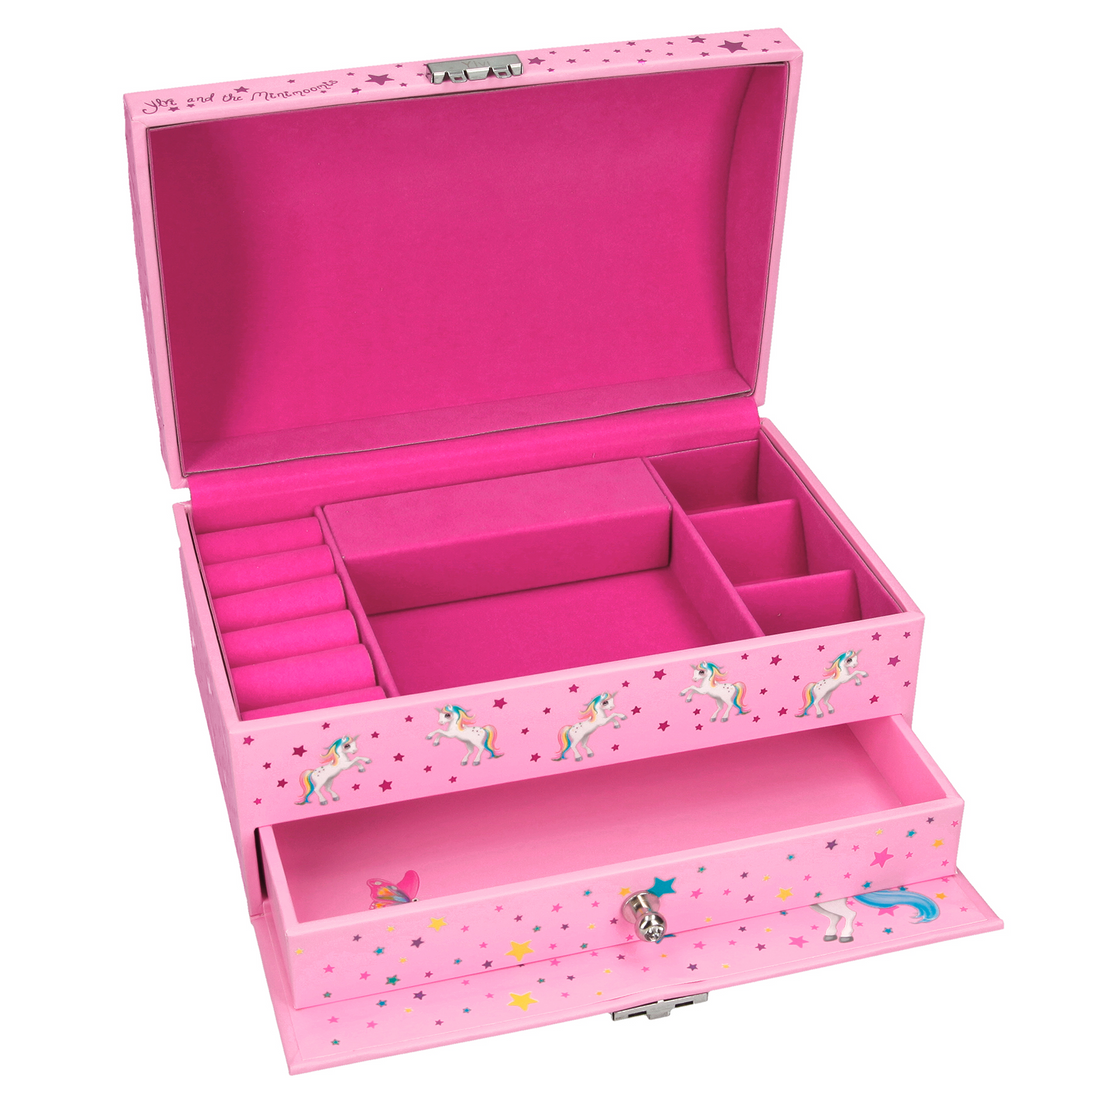 depesche-ylvi-&-the-minimoomis-jewellery-box-pink- (2)